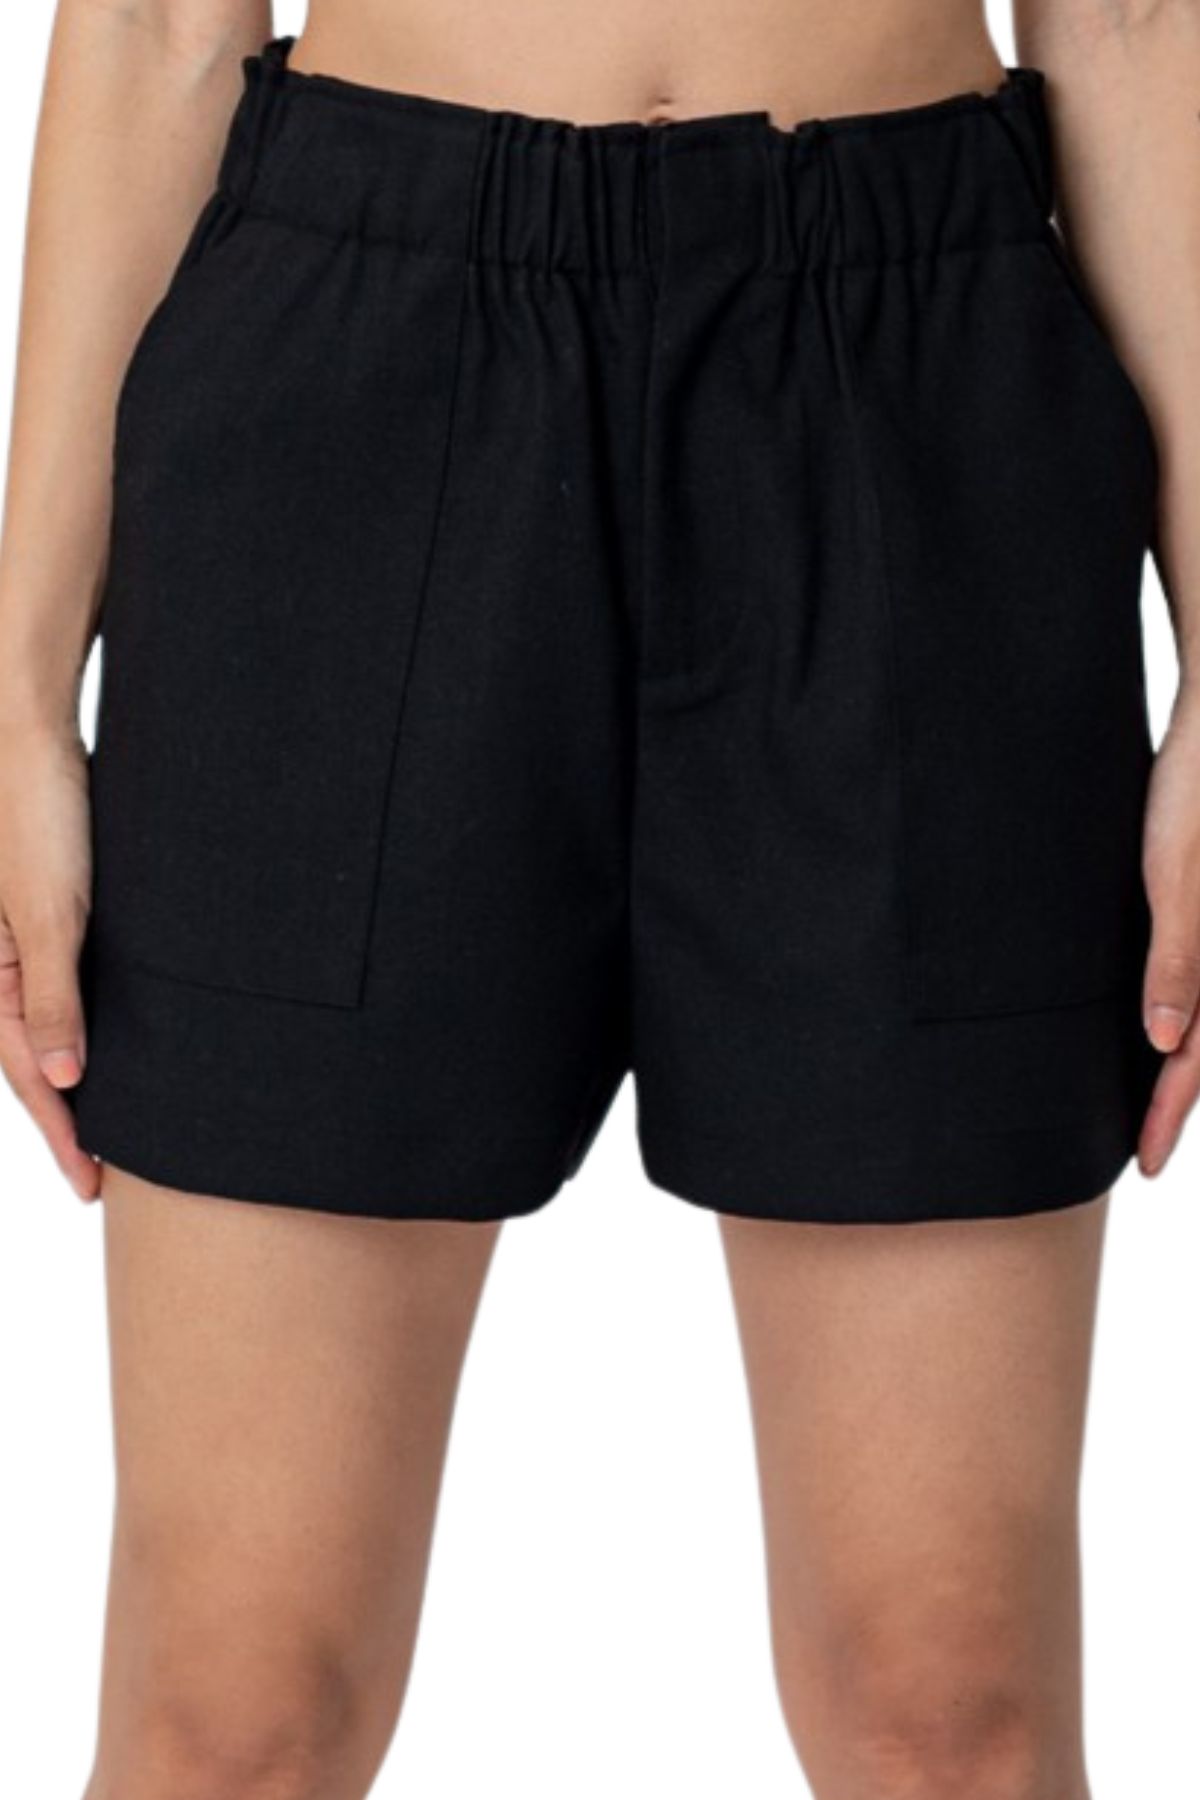 Savannah Structured Shorts